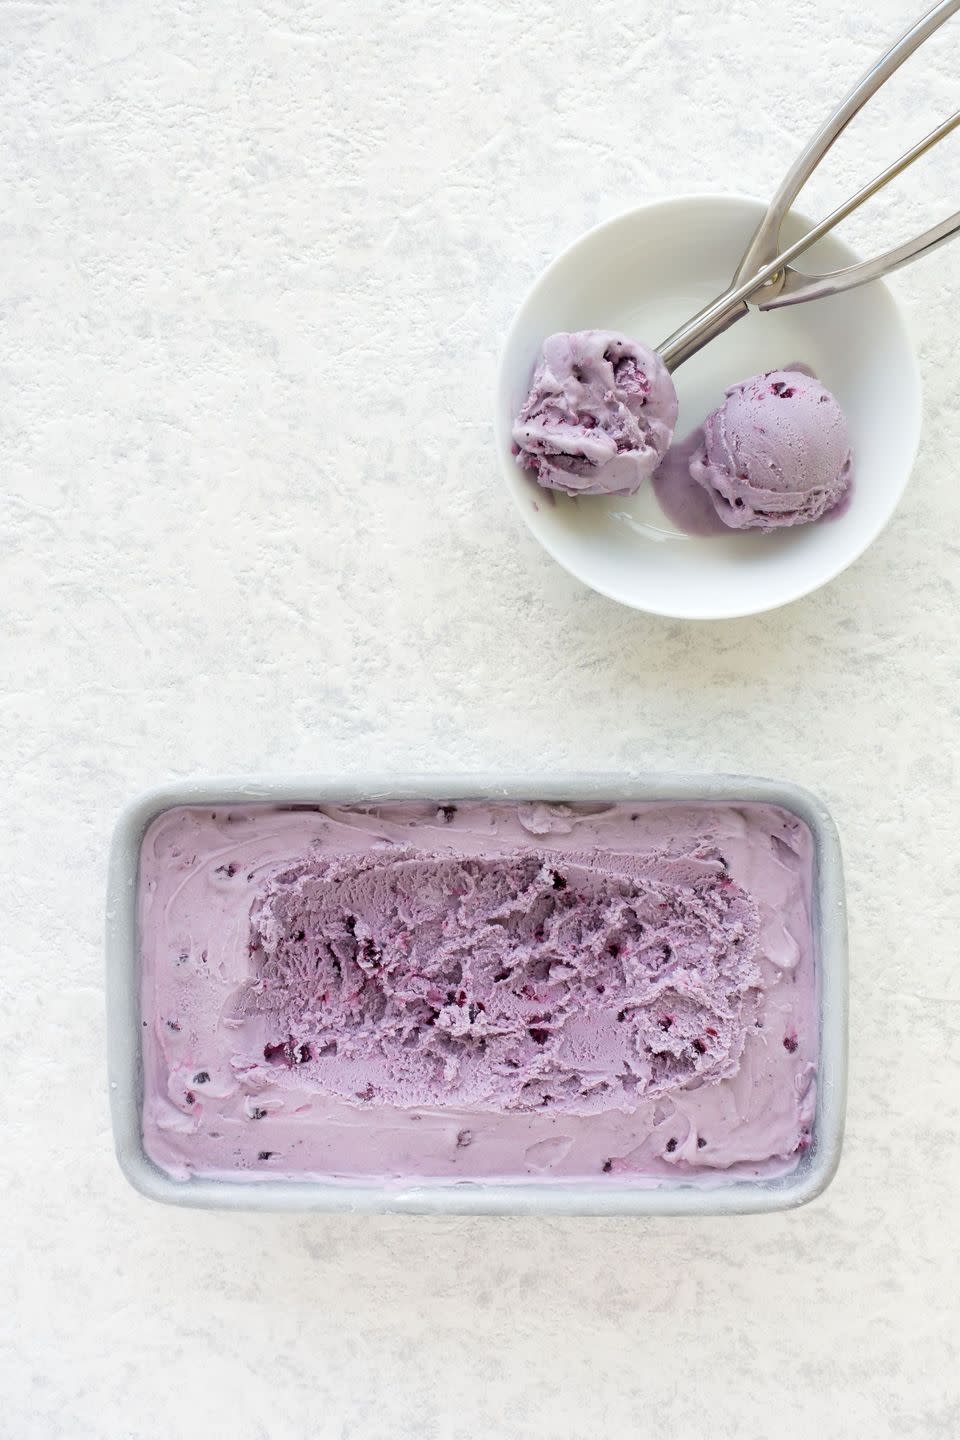 Blueberry-Lavender Ice Cream